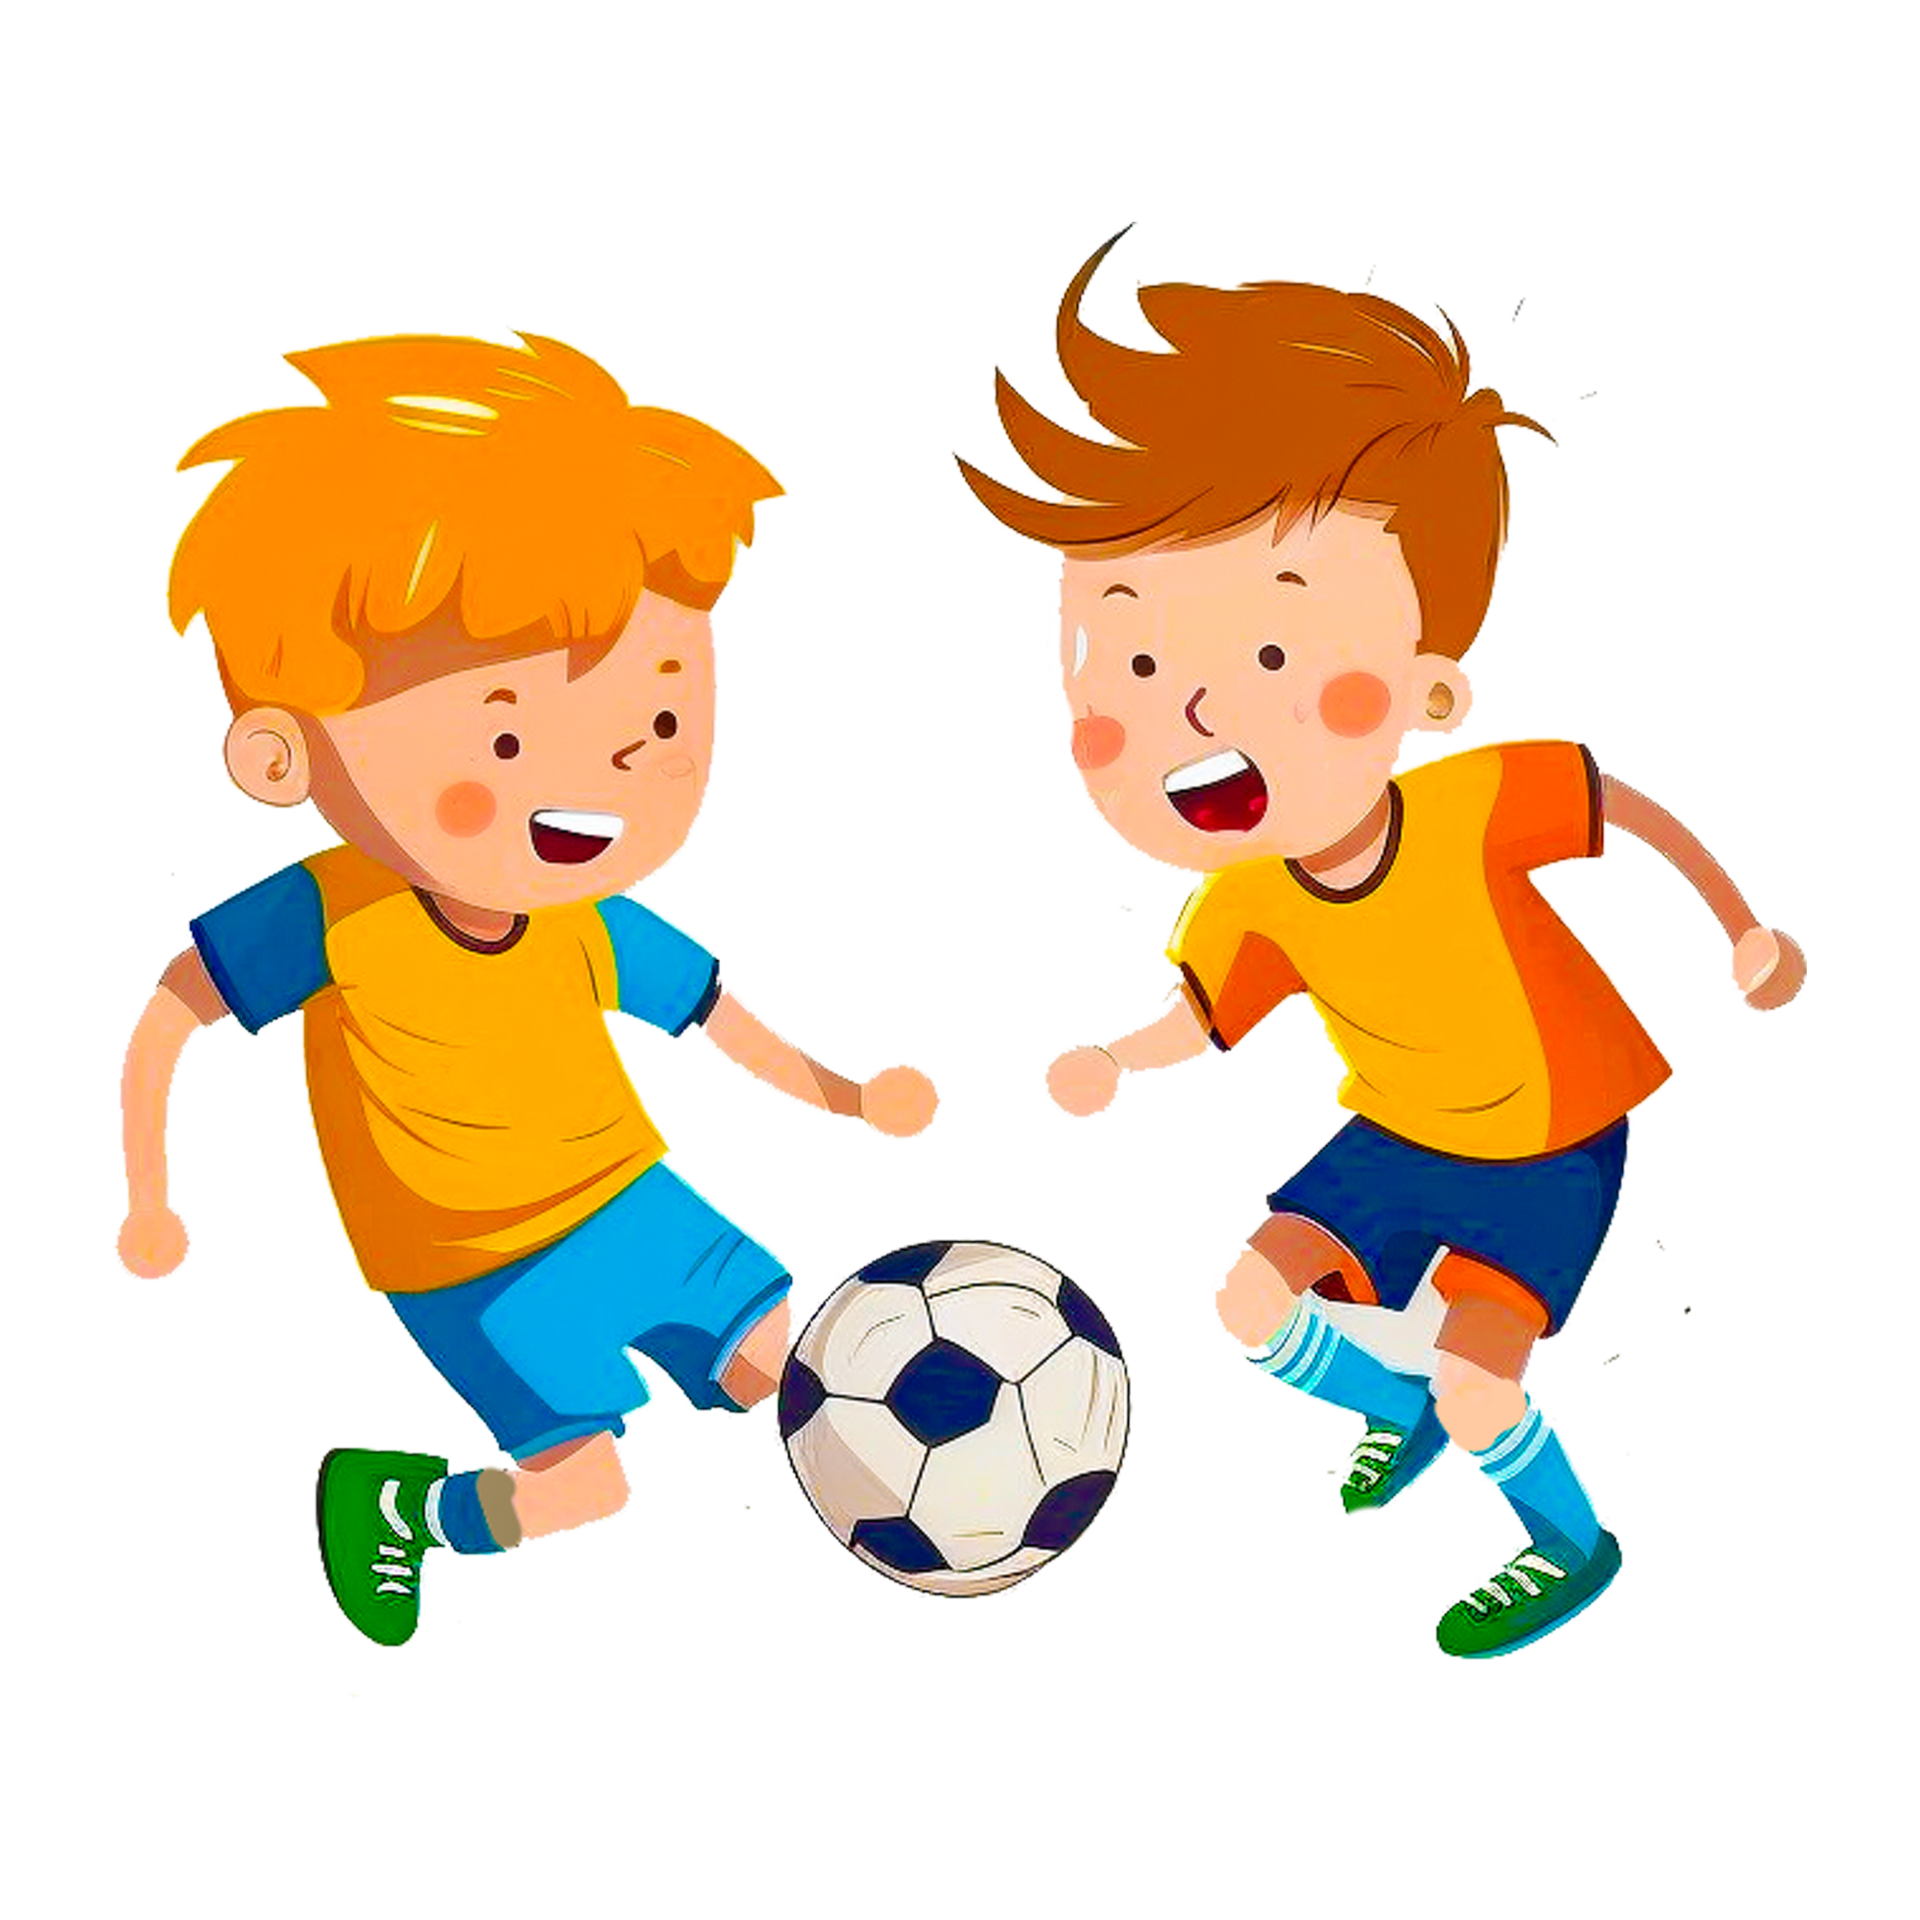 Jugar futbol infantil, futbol, juego, niños, niñito png